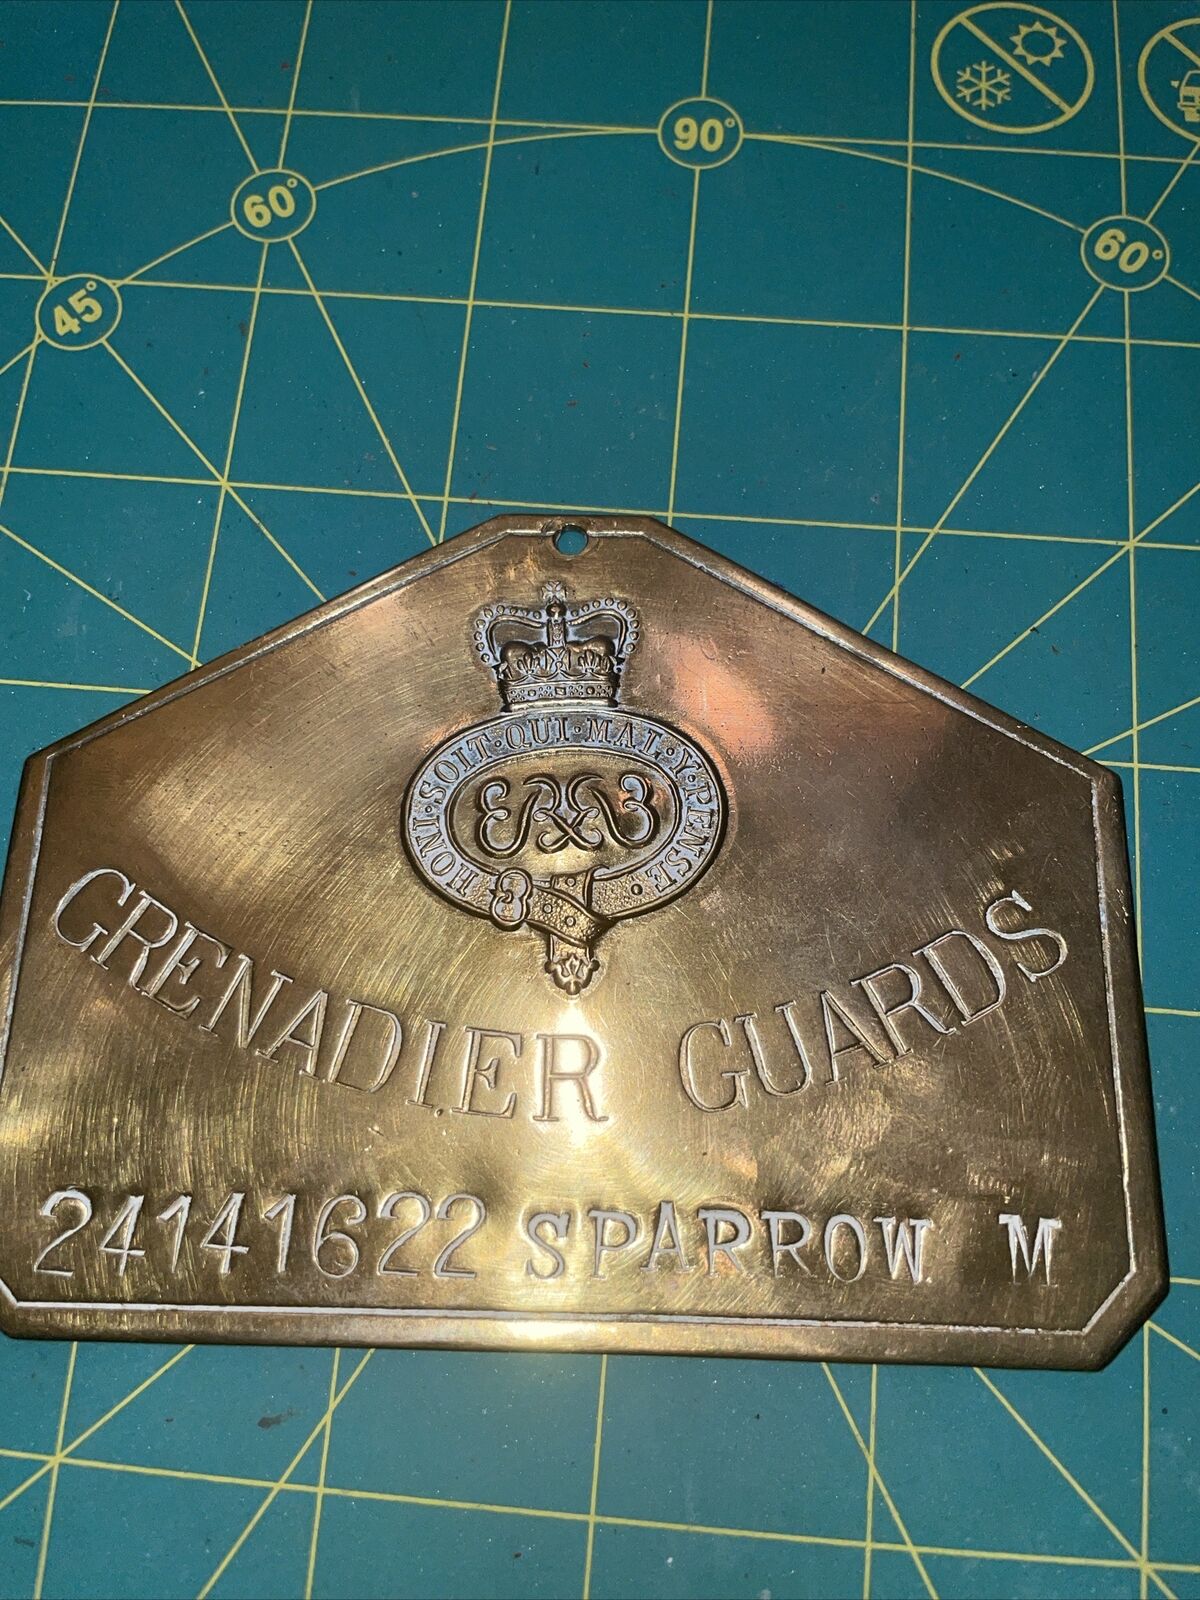 Grenadier Guards Brass Duty Bed Plate Cyper + Crown; 24141622 Sparrow M